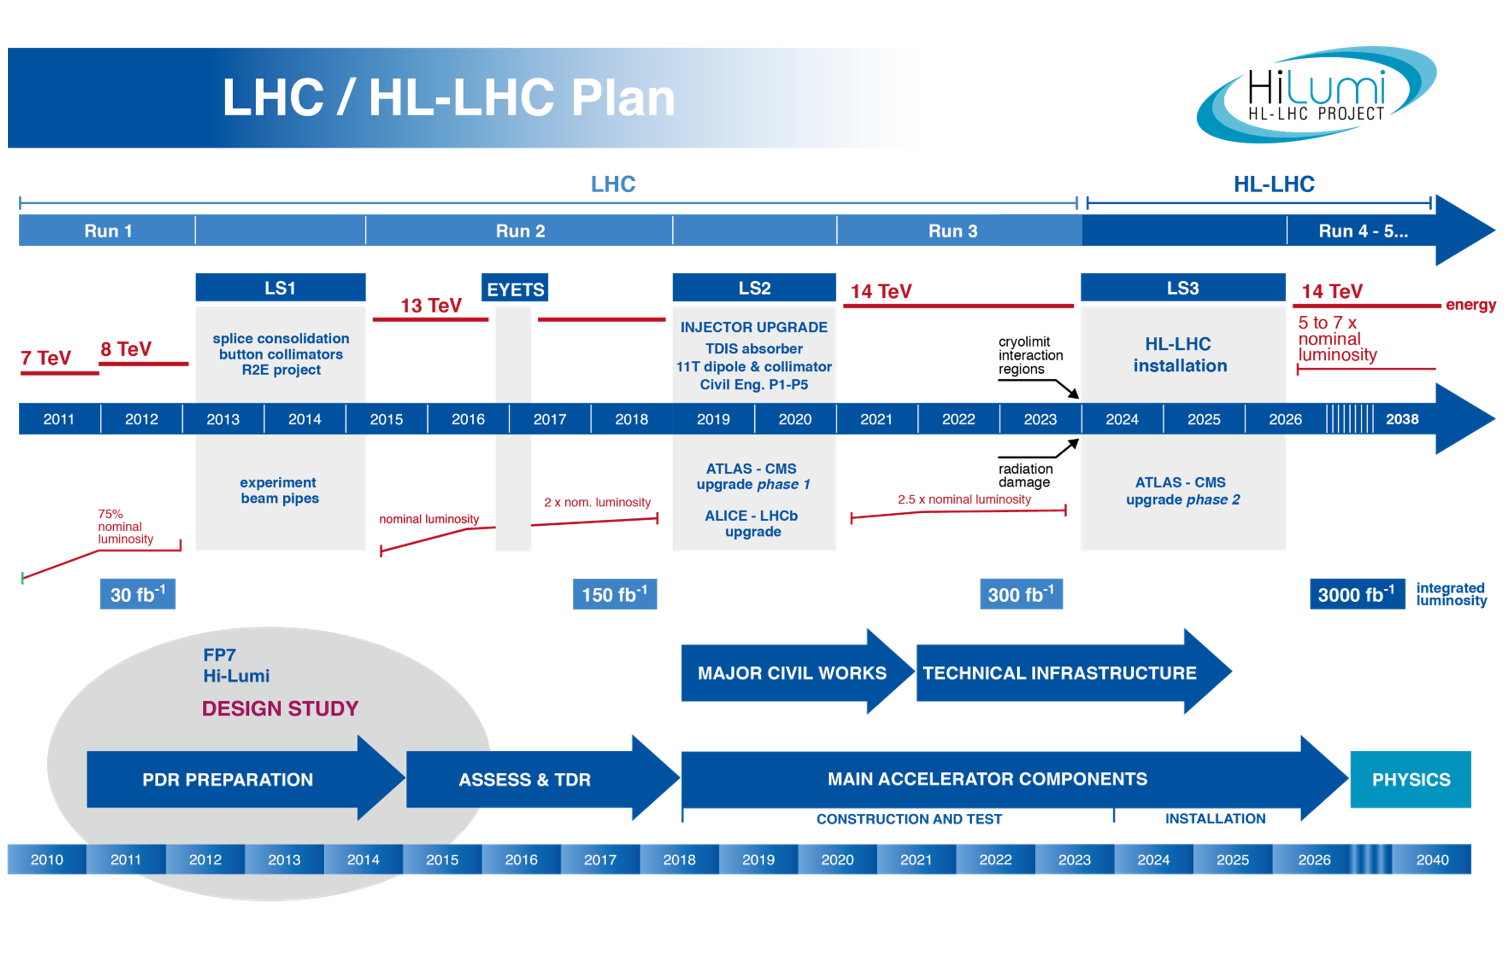 Atlas и cms. LHC cms phase-2 upgrade pictures. Cms (LHC) modernization phases. Шкала времени 2022 2023 2024. Комплектование 2024 2025